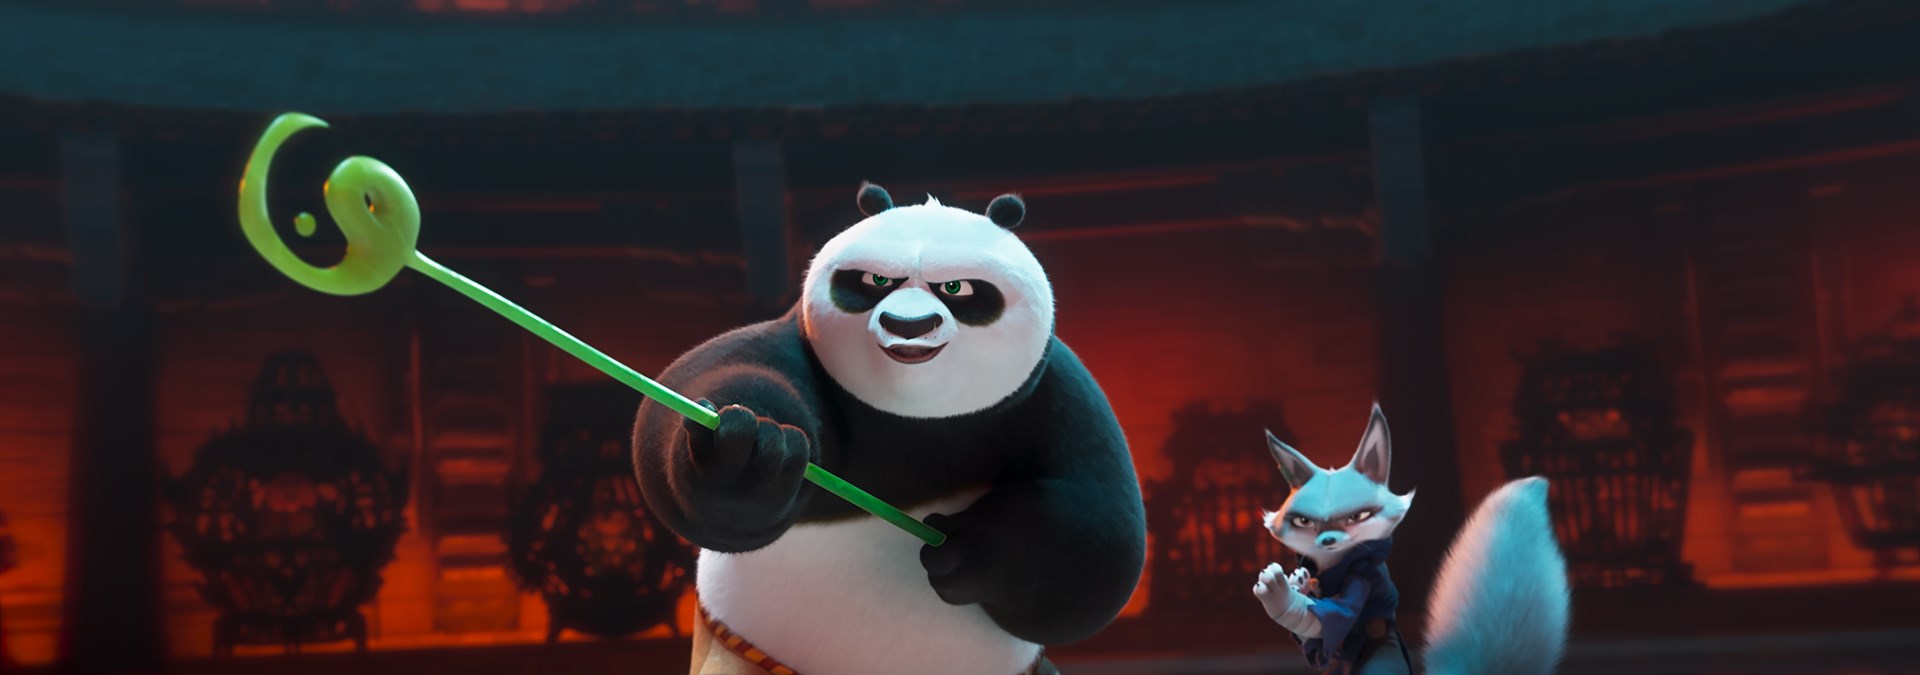 Kung Fu Panda 4 OV St 1 Jpg Sd High 2023 Dreamworks Animation All Rights Reserved Cinema Amstelveen